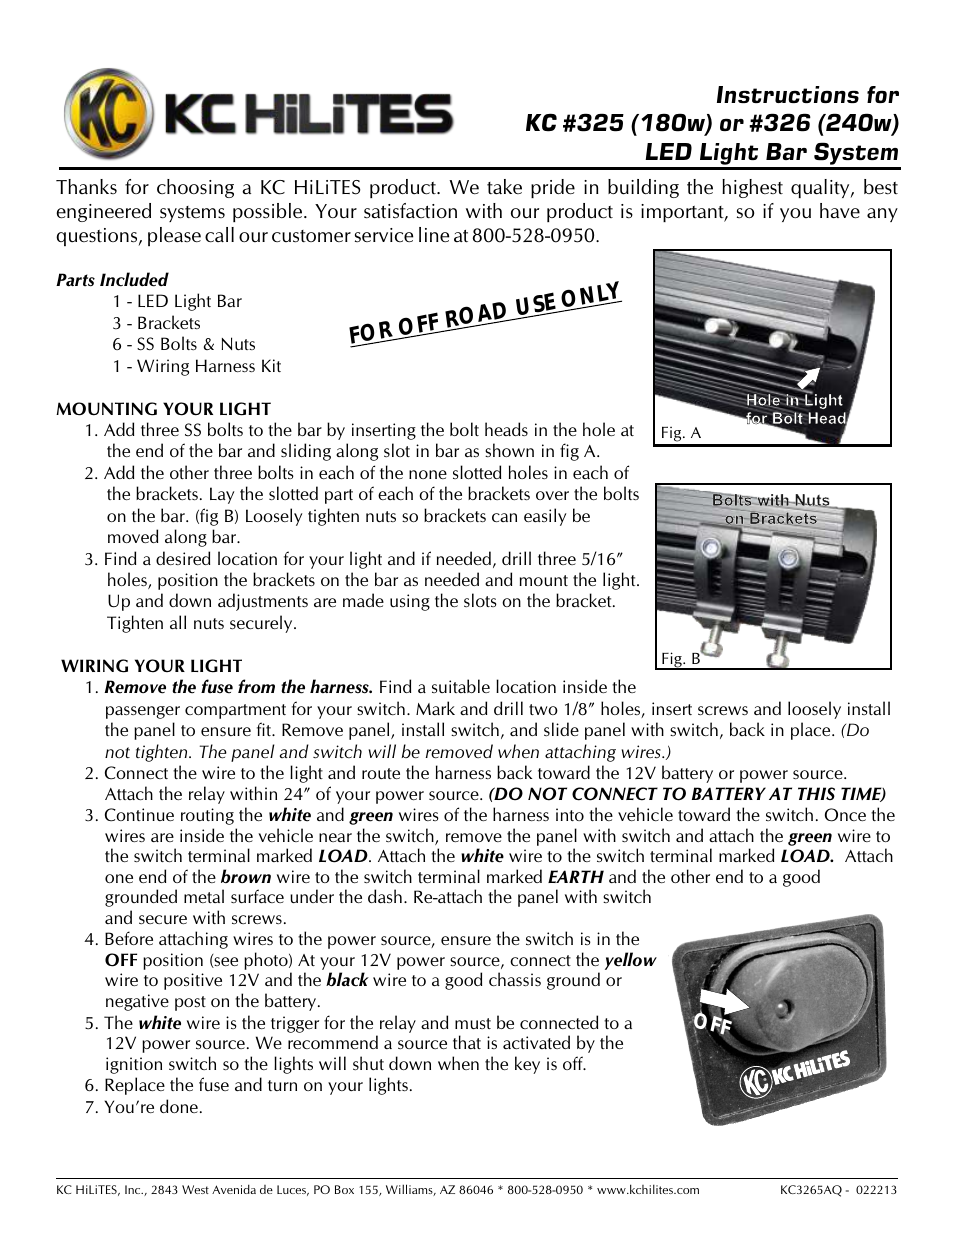 KC #326 (240w) LED Light Bar System Instructions